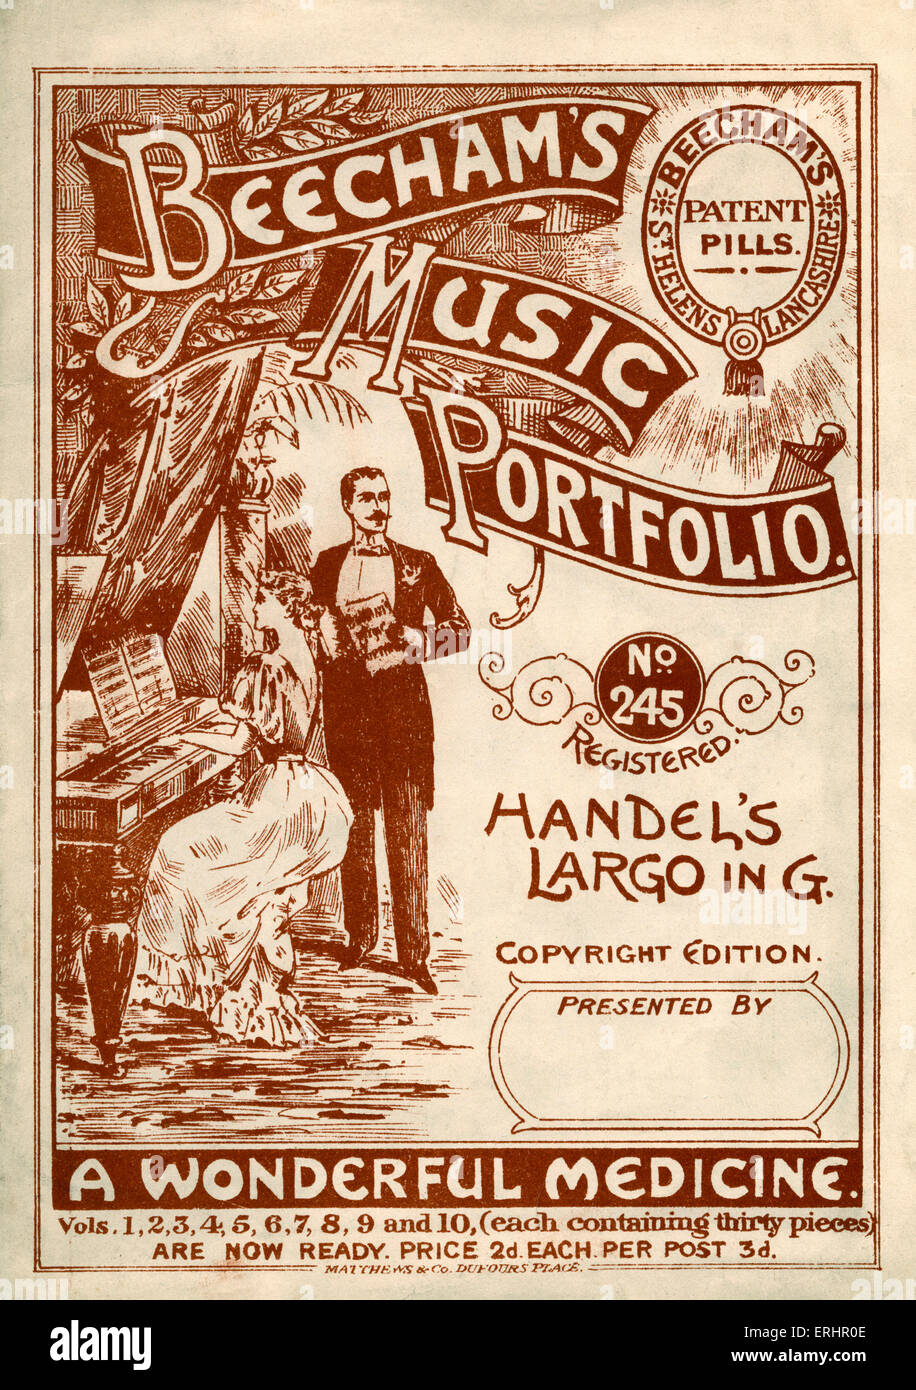 Beecham's Music Portfolio - no. 245:  Handel's Largo in G.  Copyright edition published by Beechams Patent Pills. Advertising Stock Photo